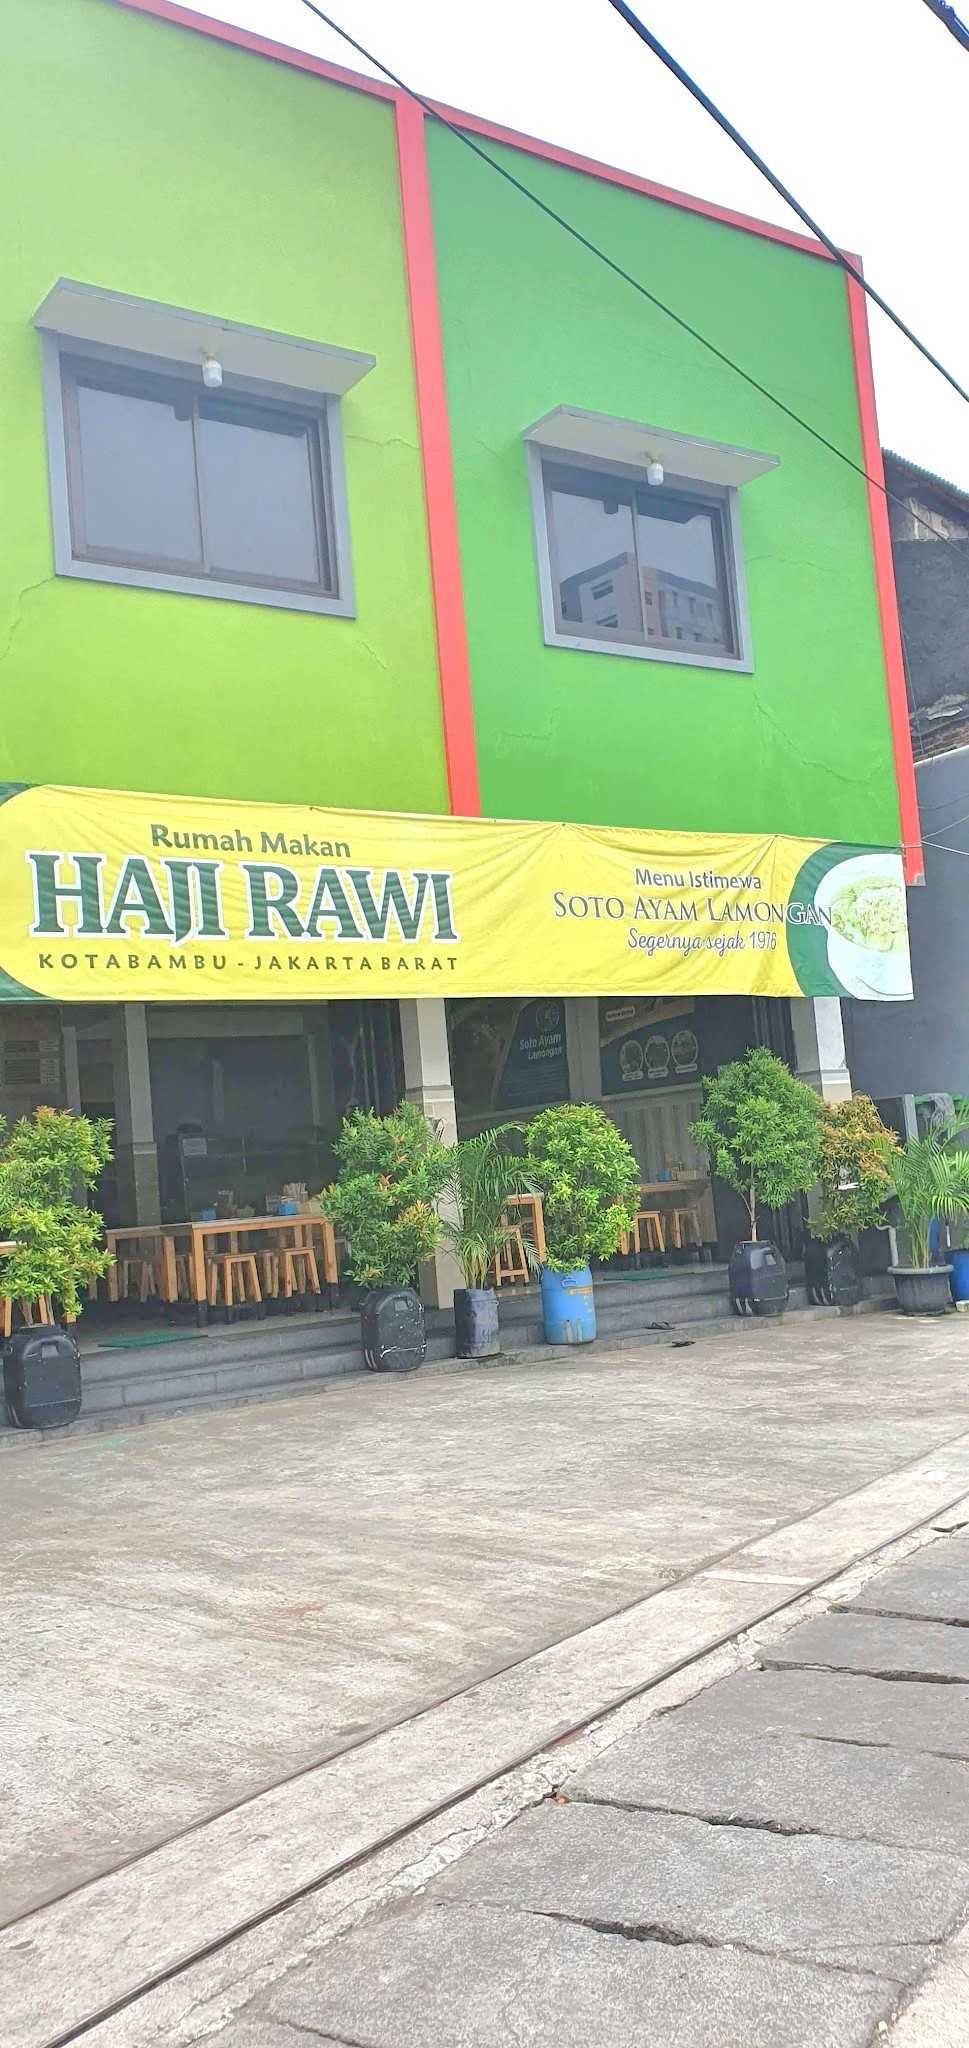 Rumah Makan Haji Rawi 1